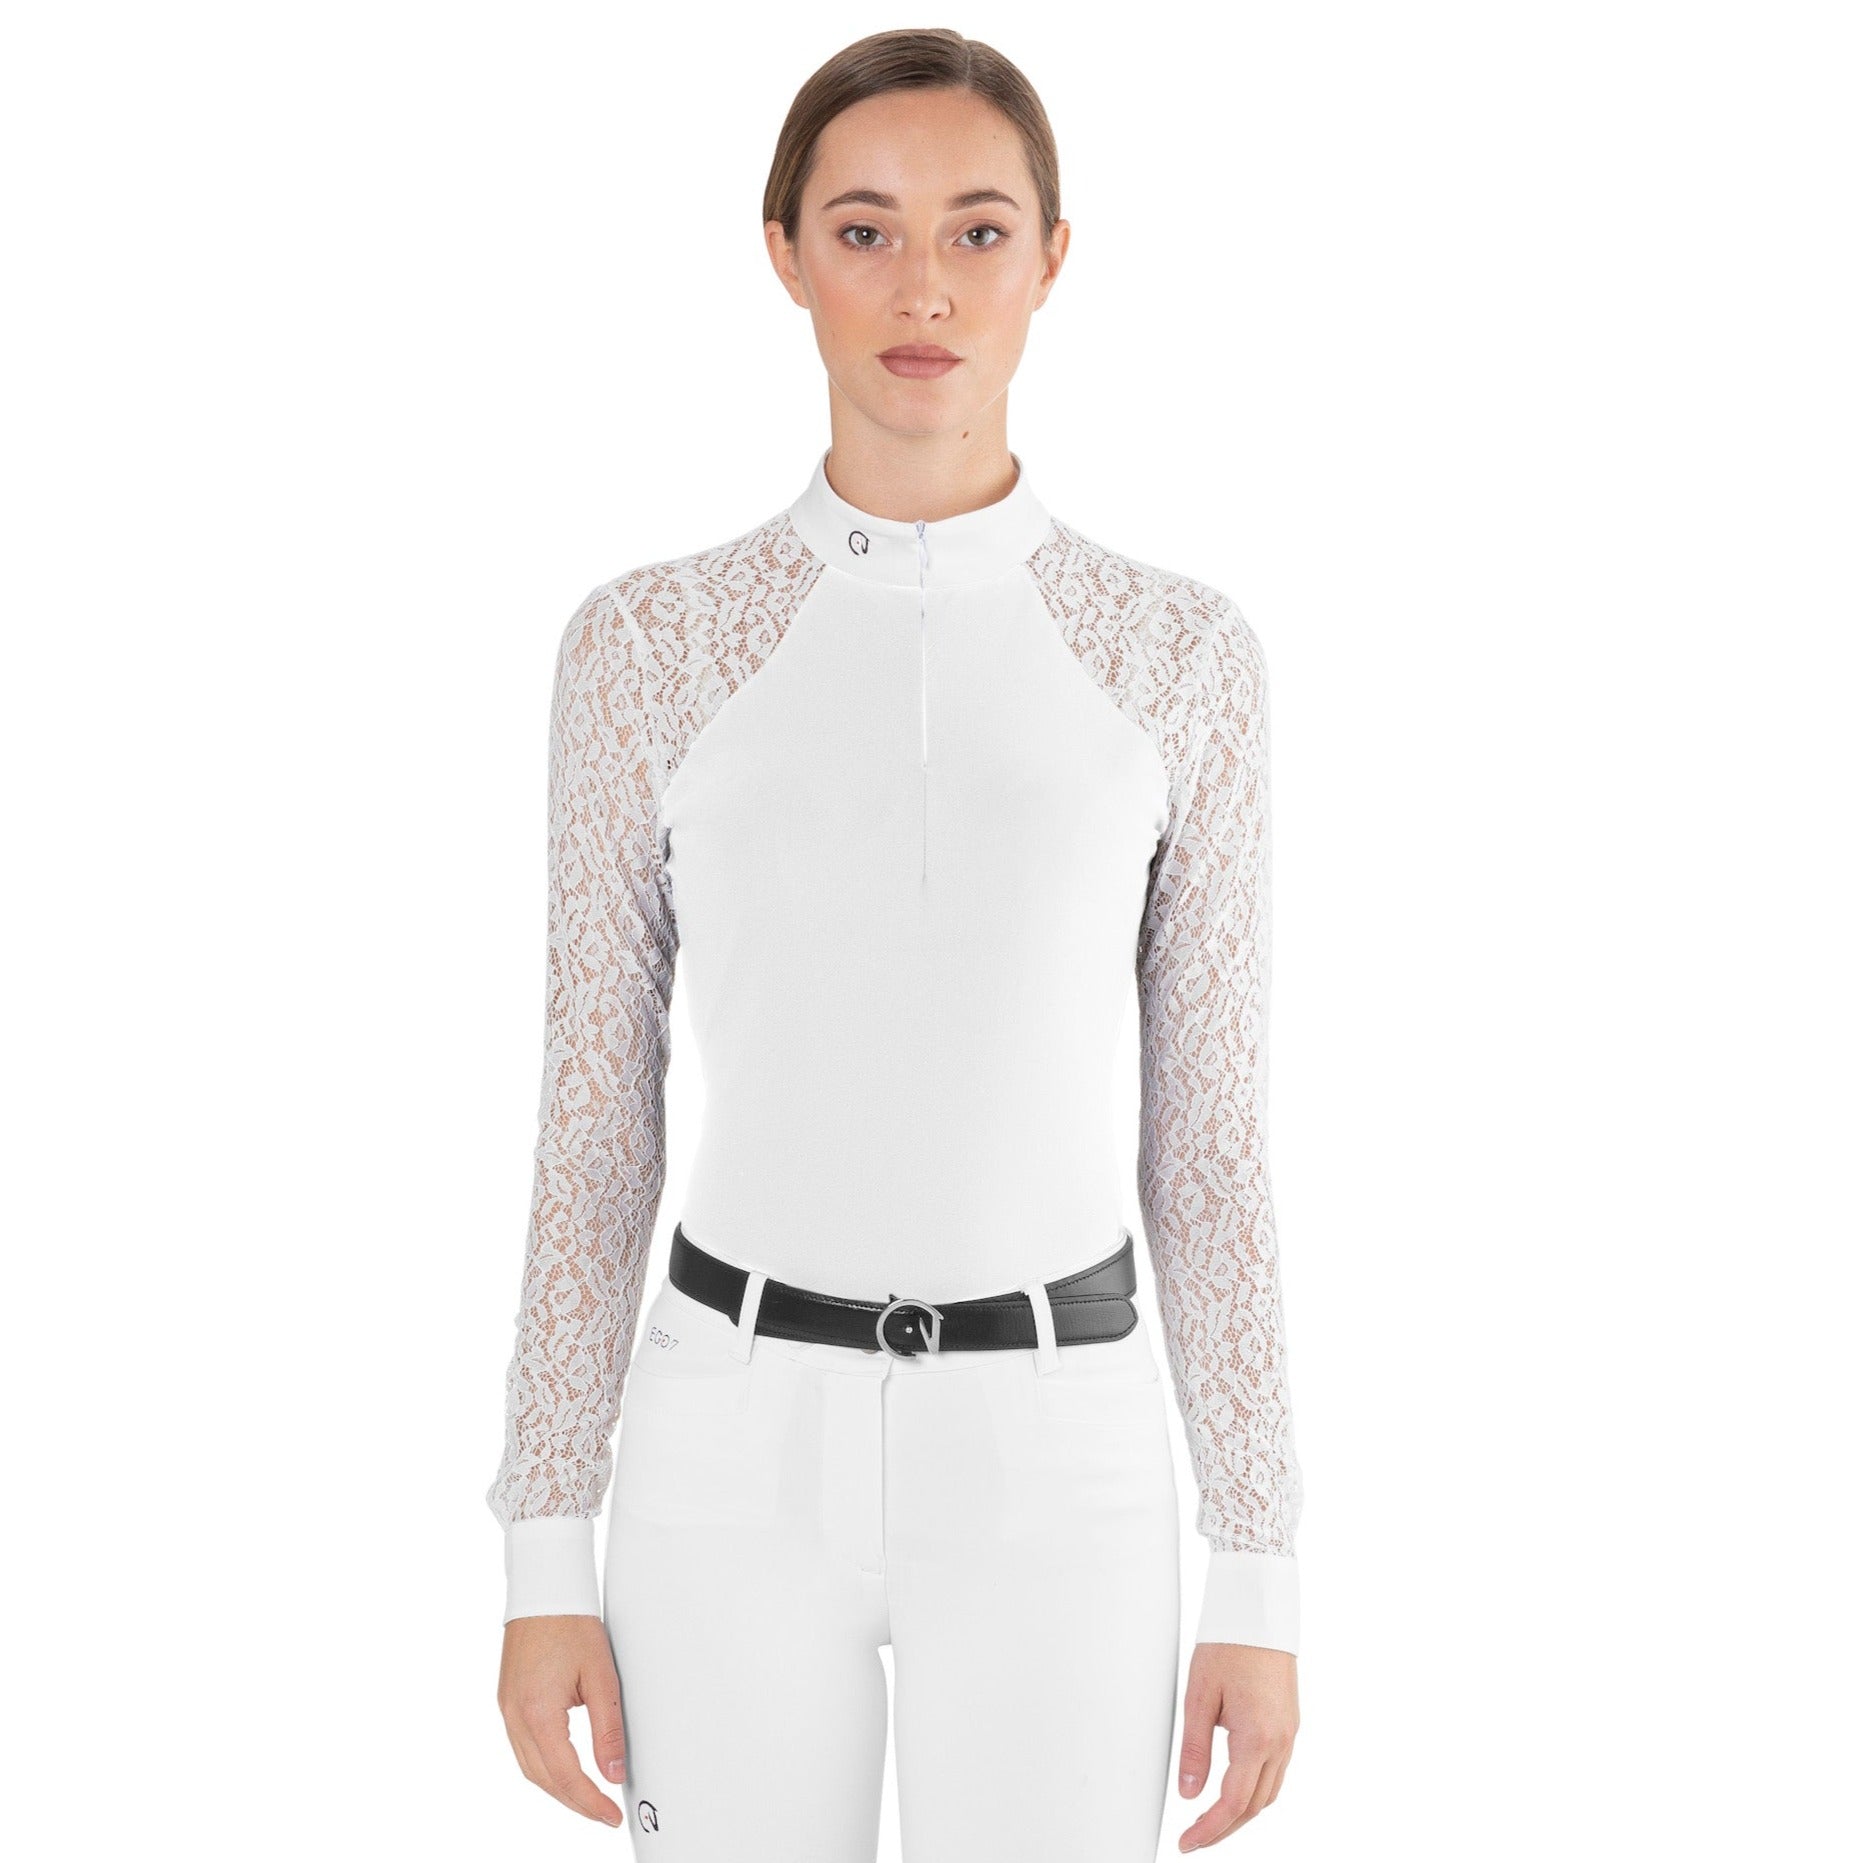 EGO7 Florentine ML Lace Long Sleeve Competition Shirt, White